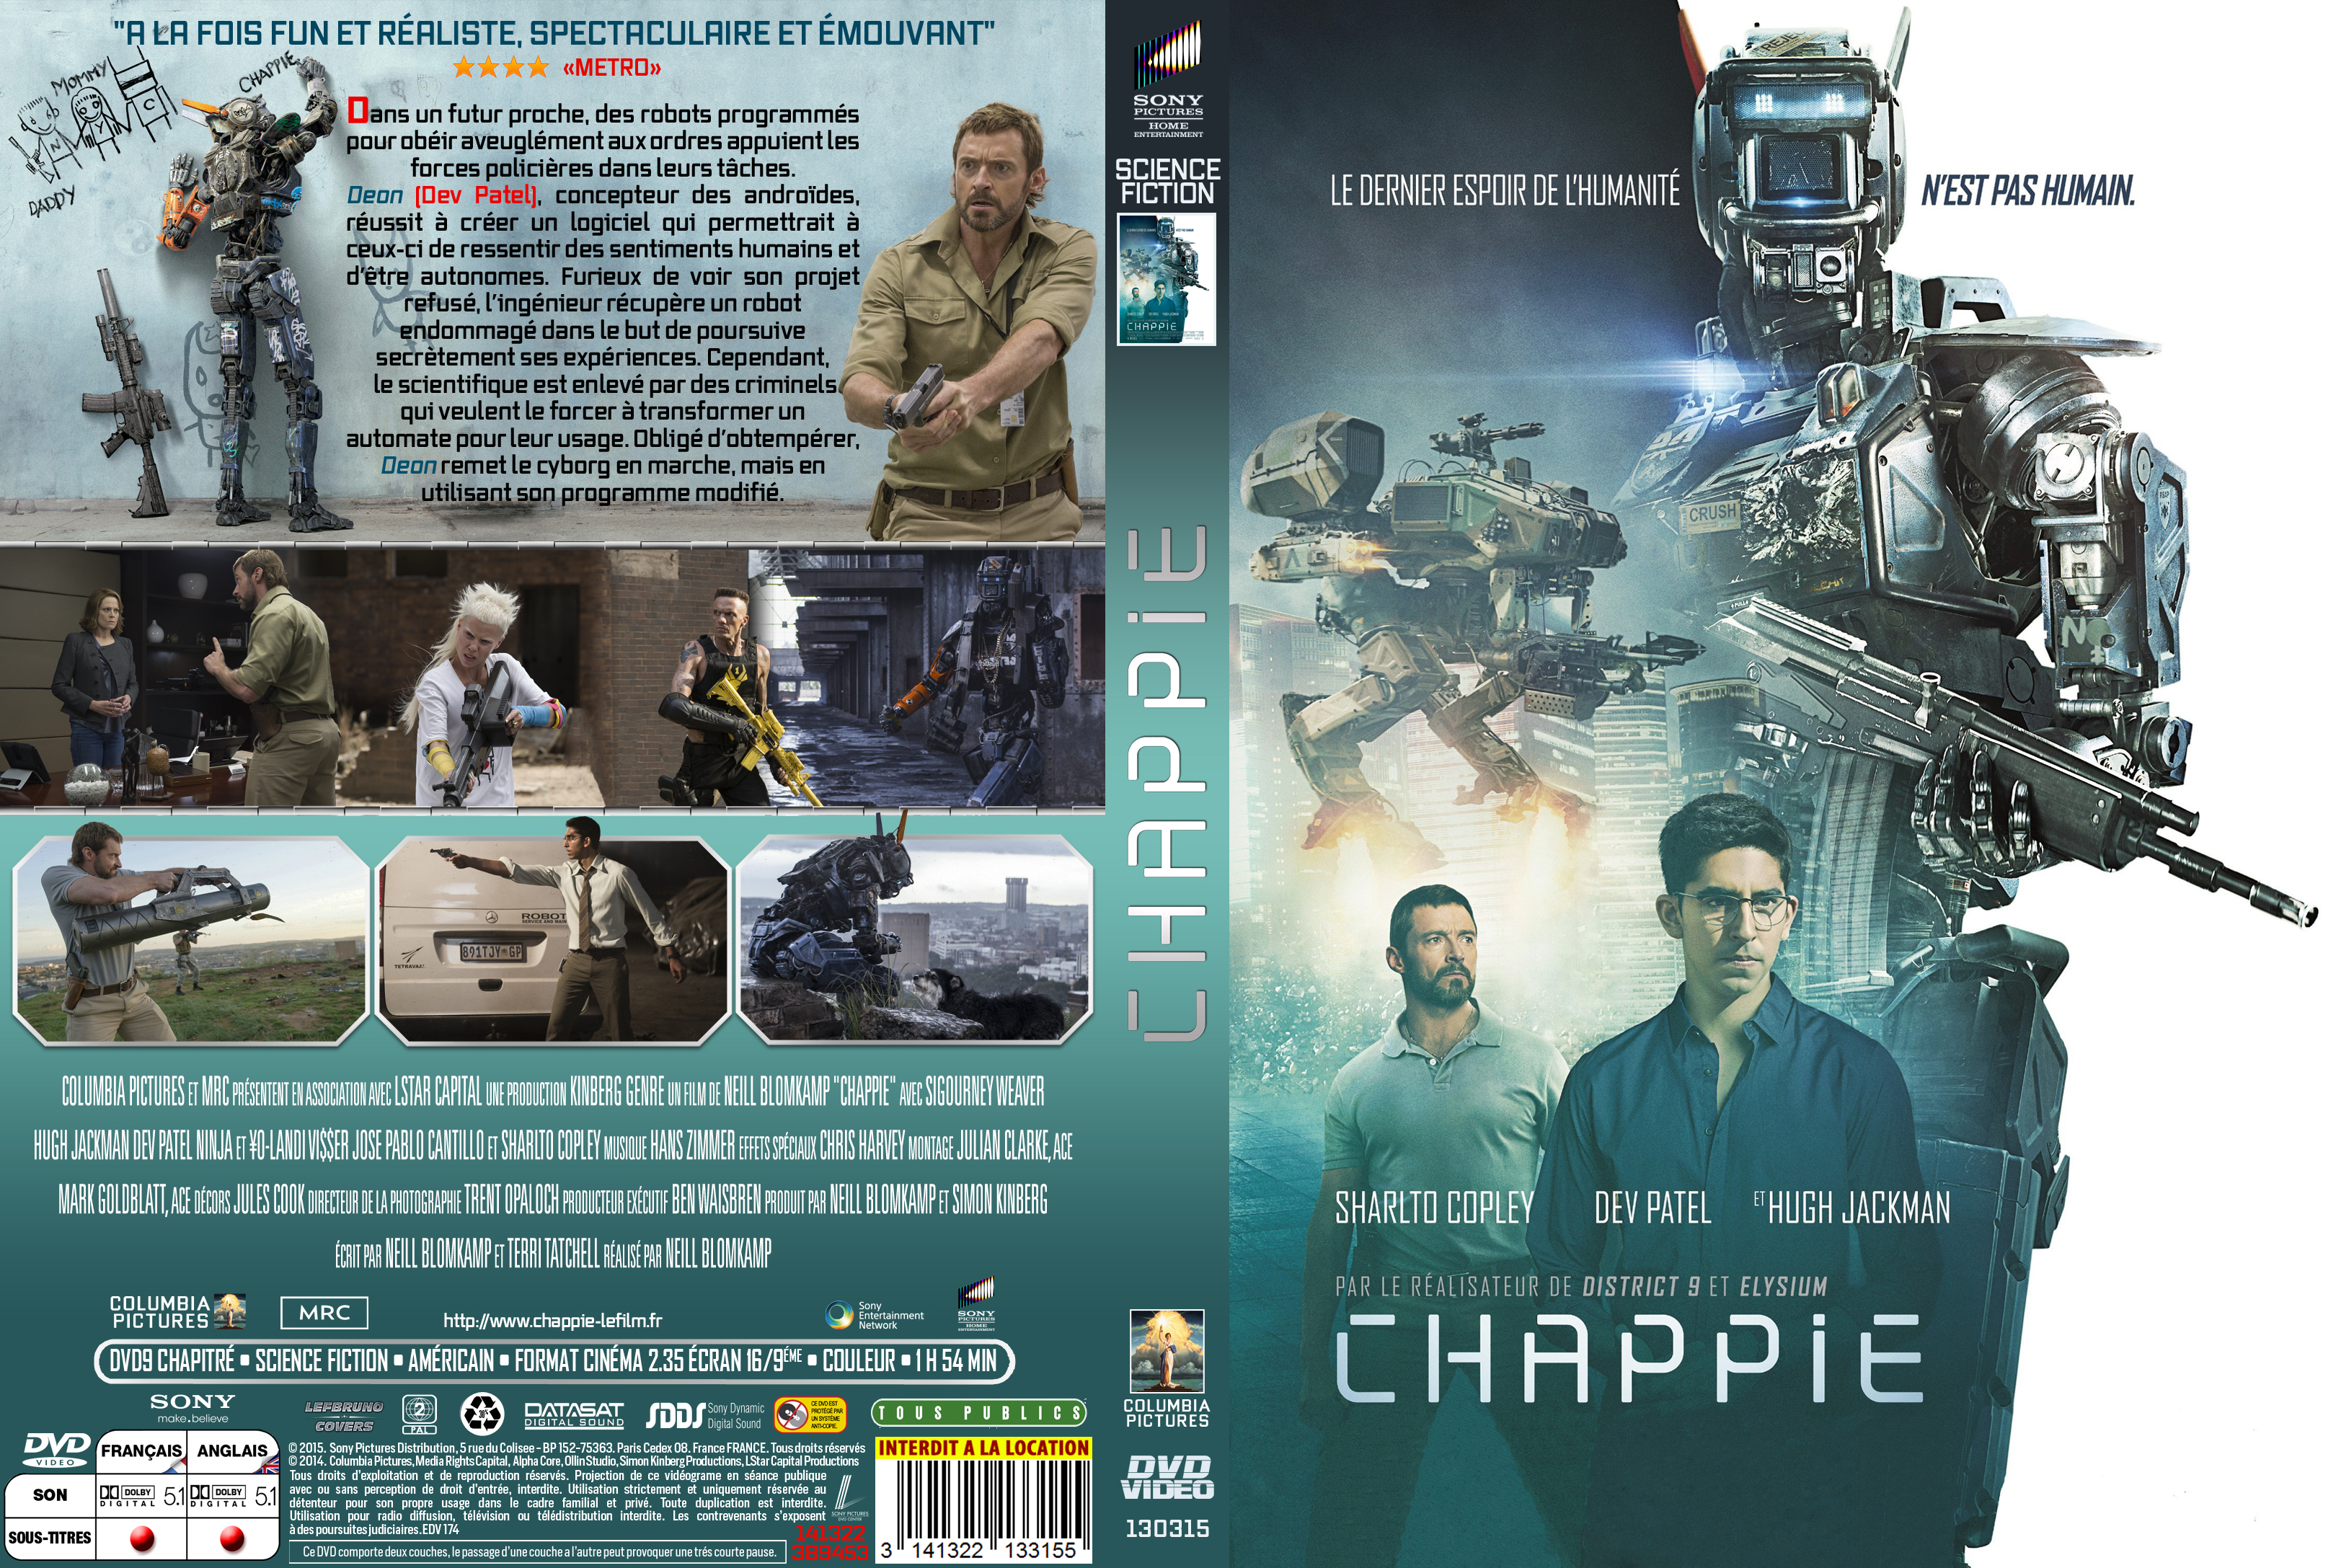 Jaquette DVD Chappie custom